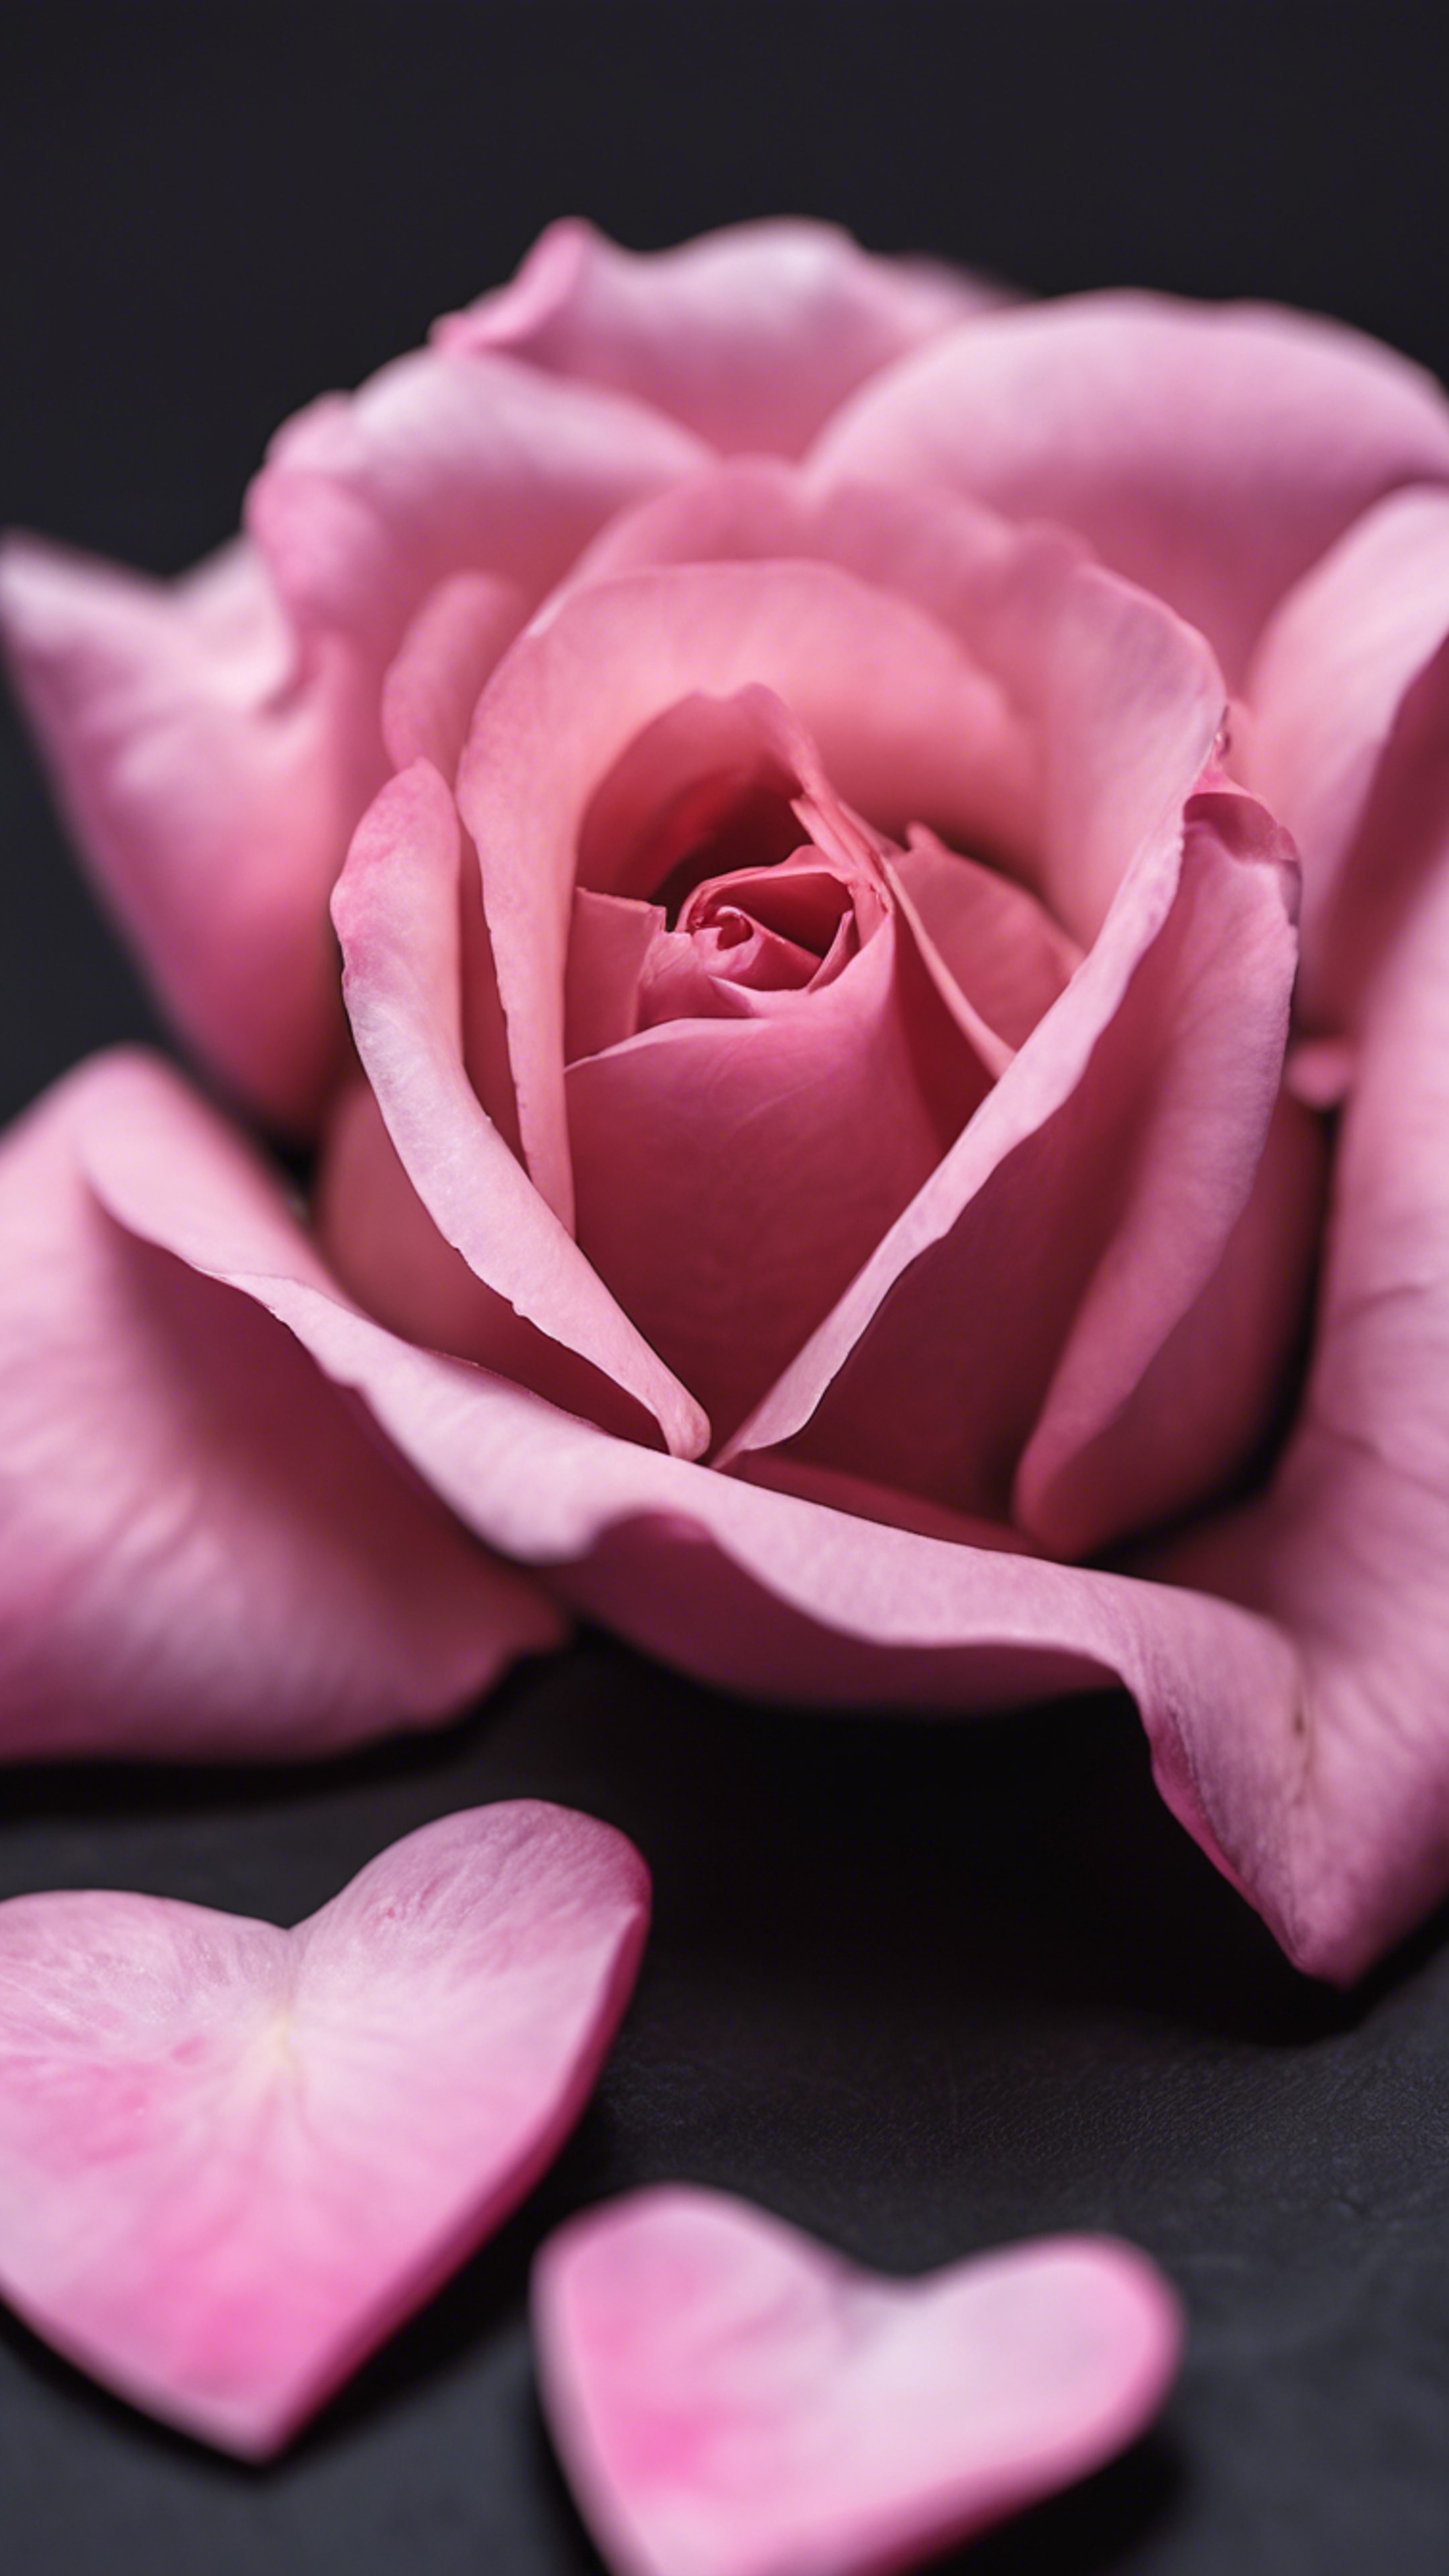 A single, perfect pink heart-shaped rose petal on a black table.壁紙[a14a0e64e3fd4358915b]